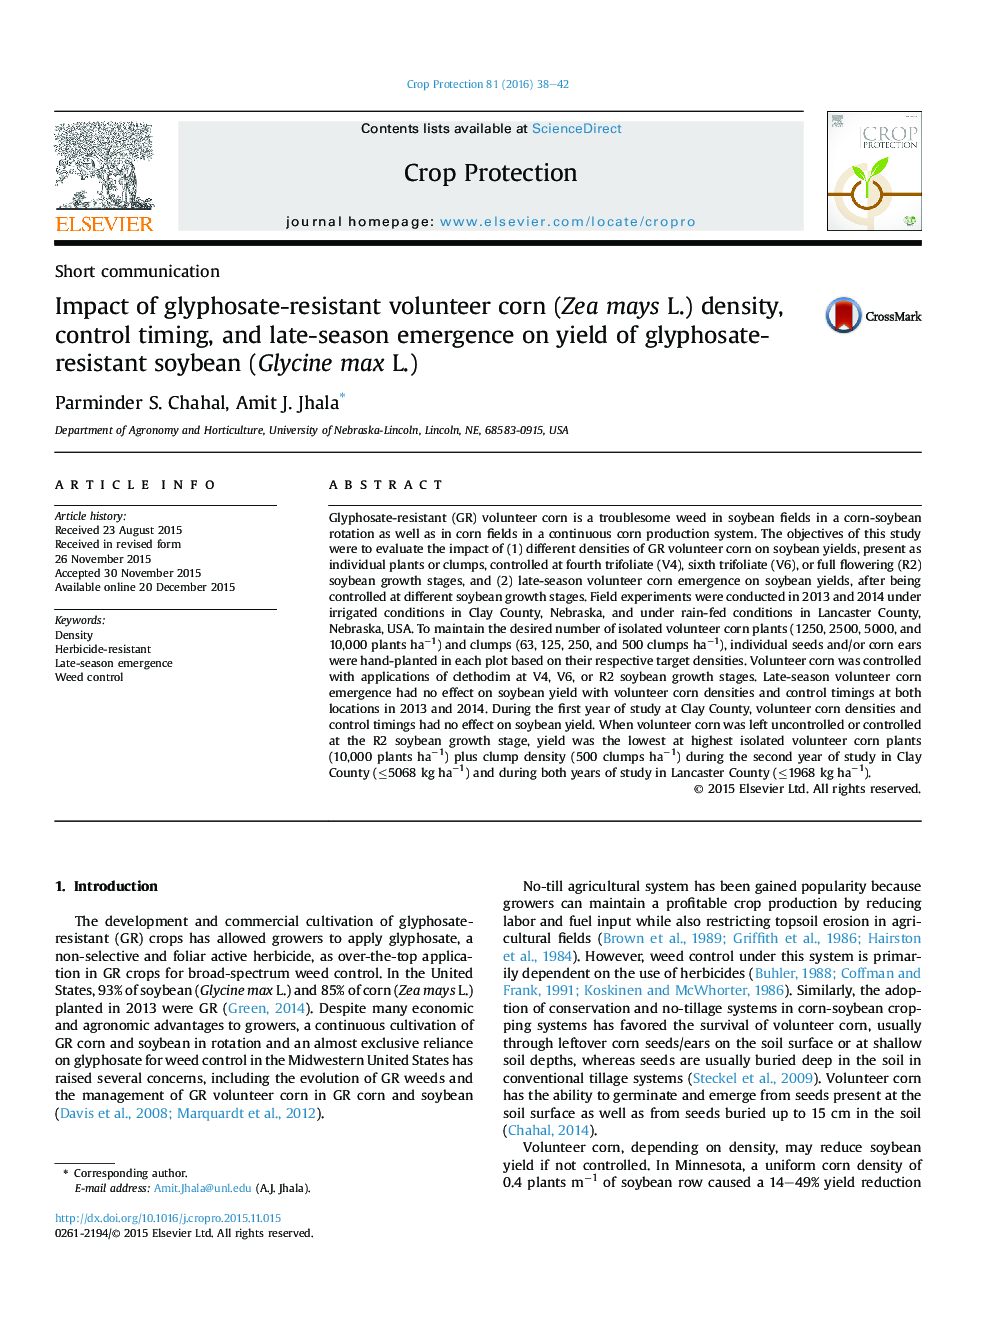 Short communicationImpact of glyphosate-resistant volunteer corn (Zea mays L.) density, control timing, and late-season emergence on yield of glyphosate-resistant soybean (Glycine max L.)